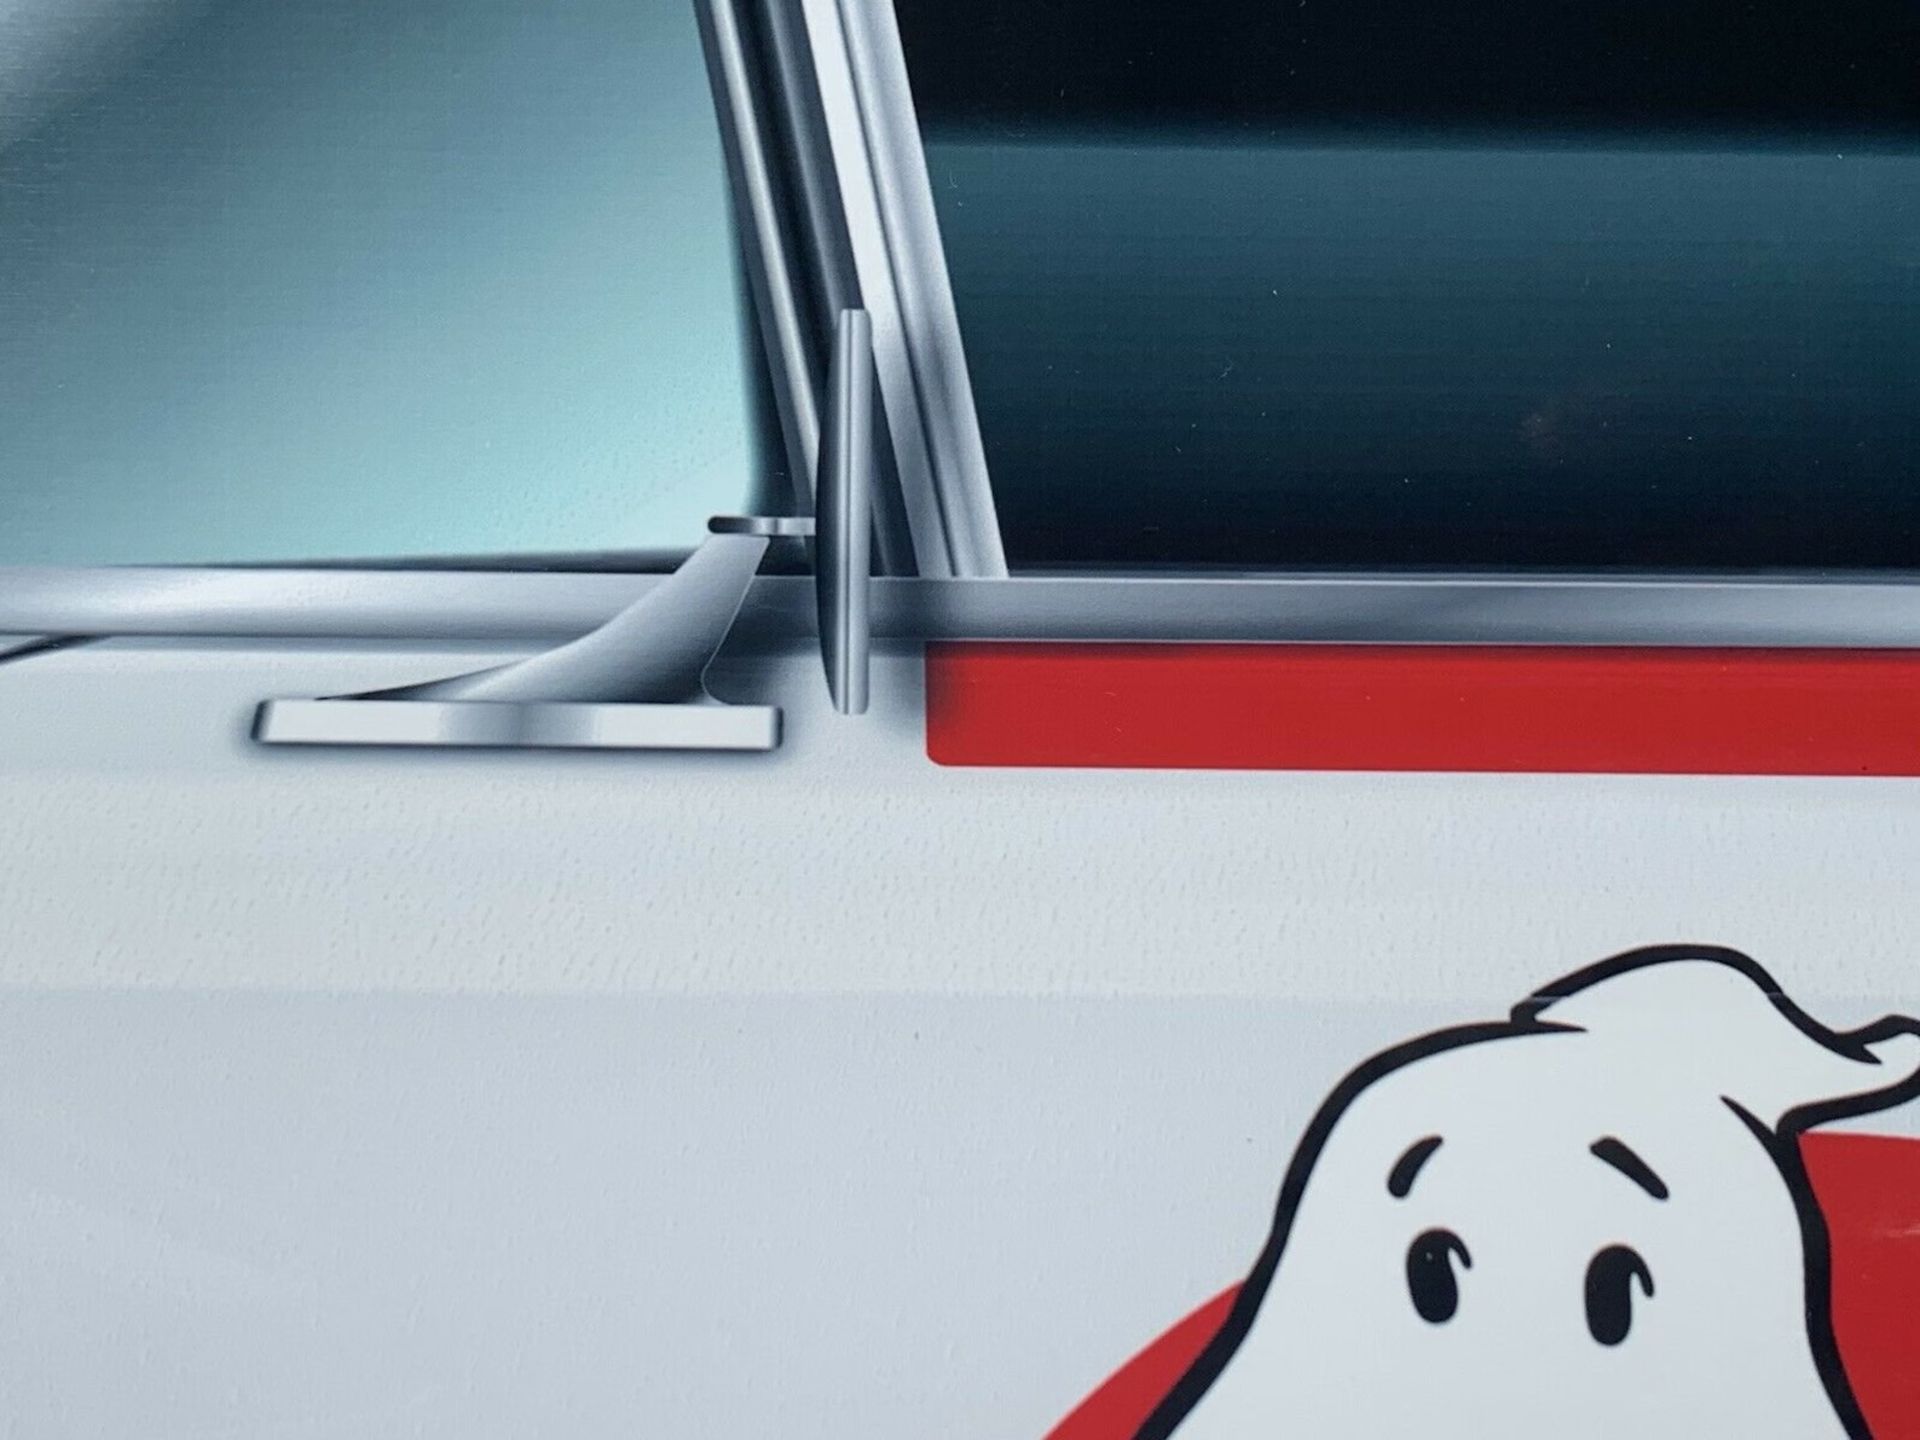 Ghostbusters Car Garage Display - Image 2 of 3